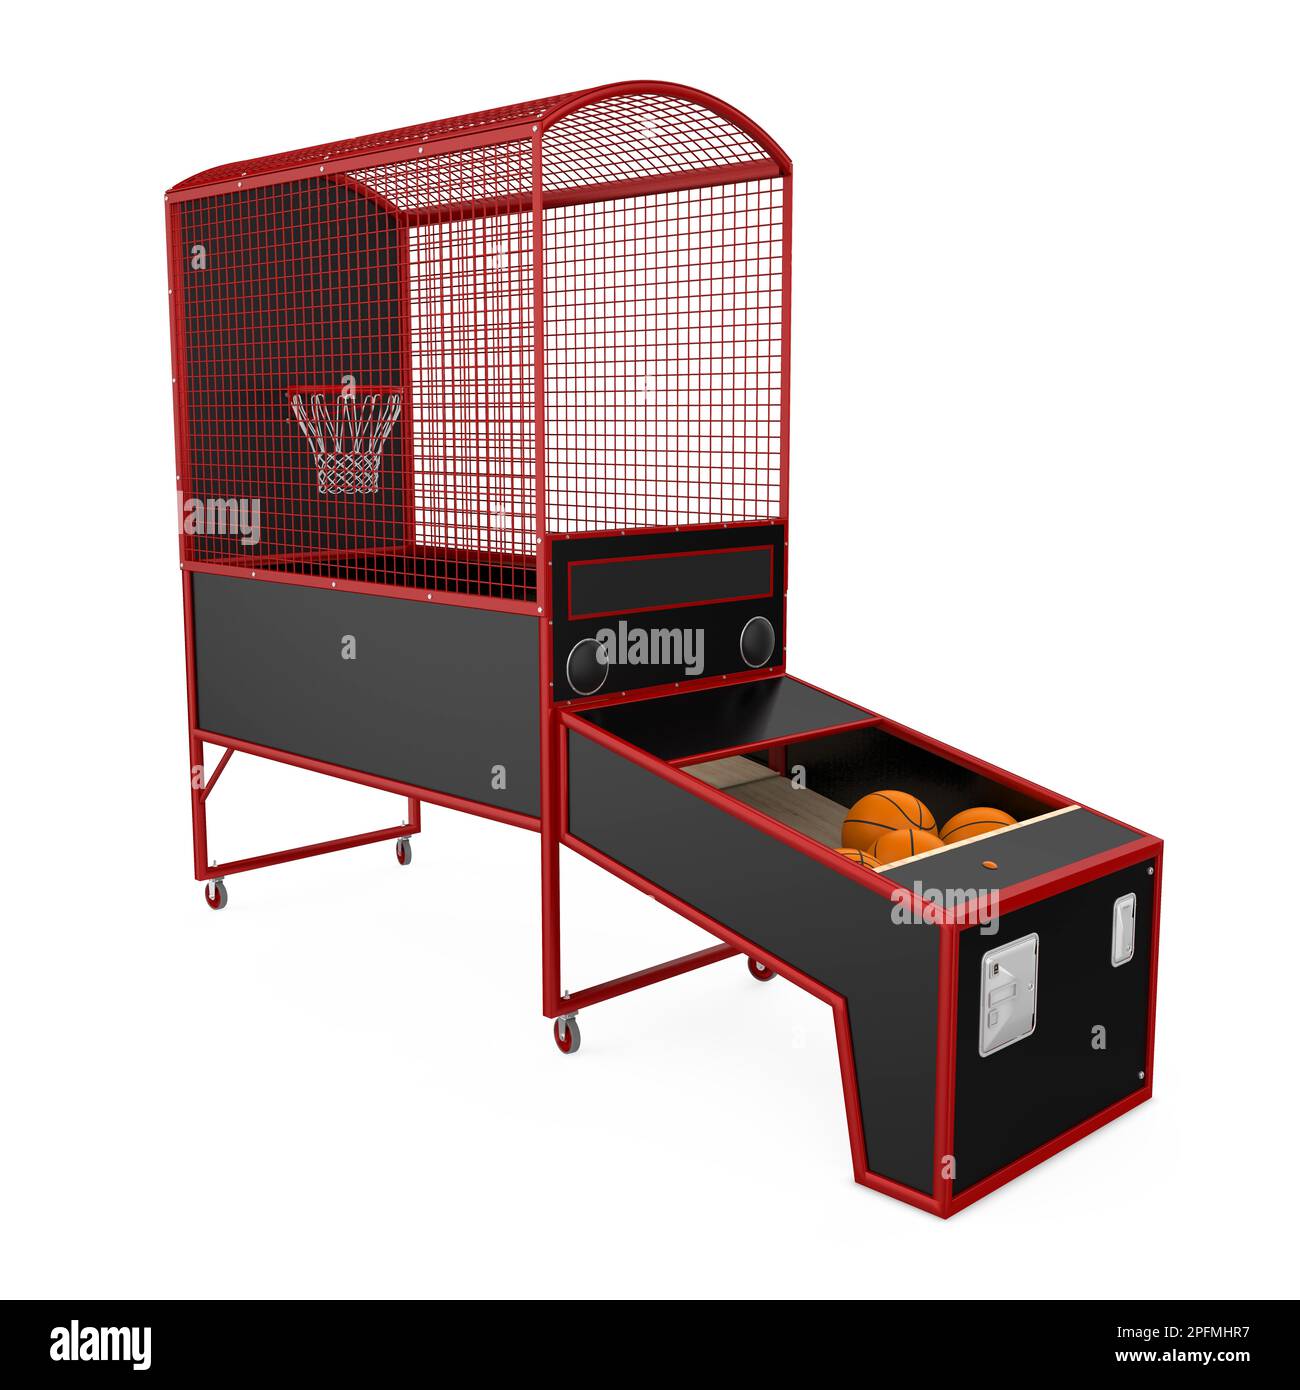 Arcade Basketball Machine Isolated Stock Photo